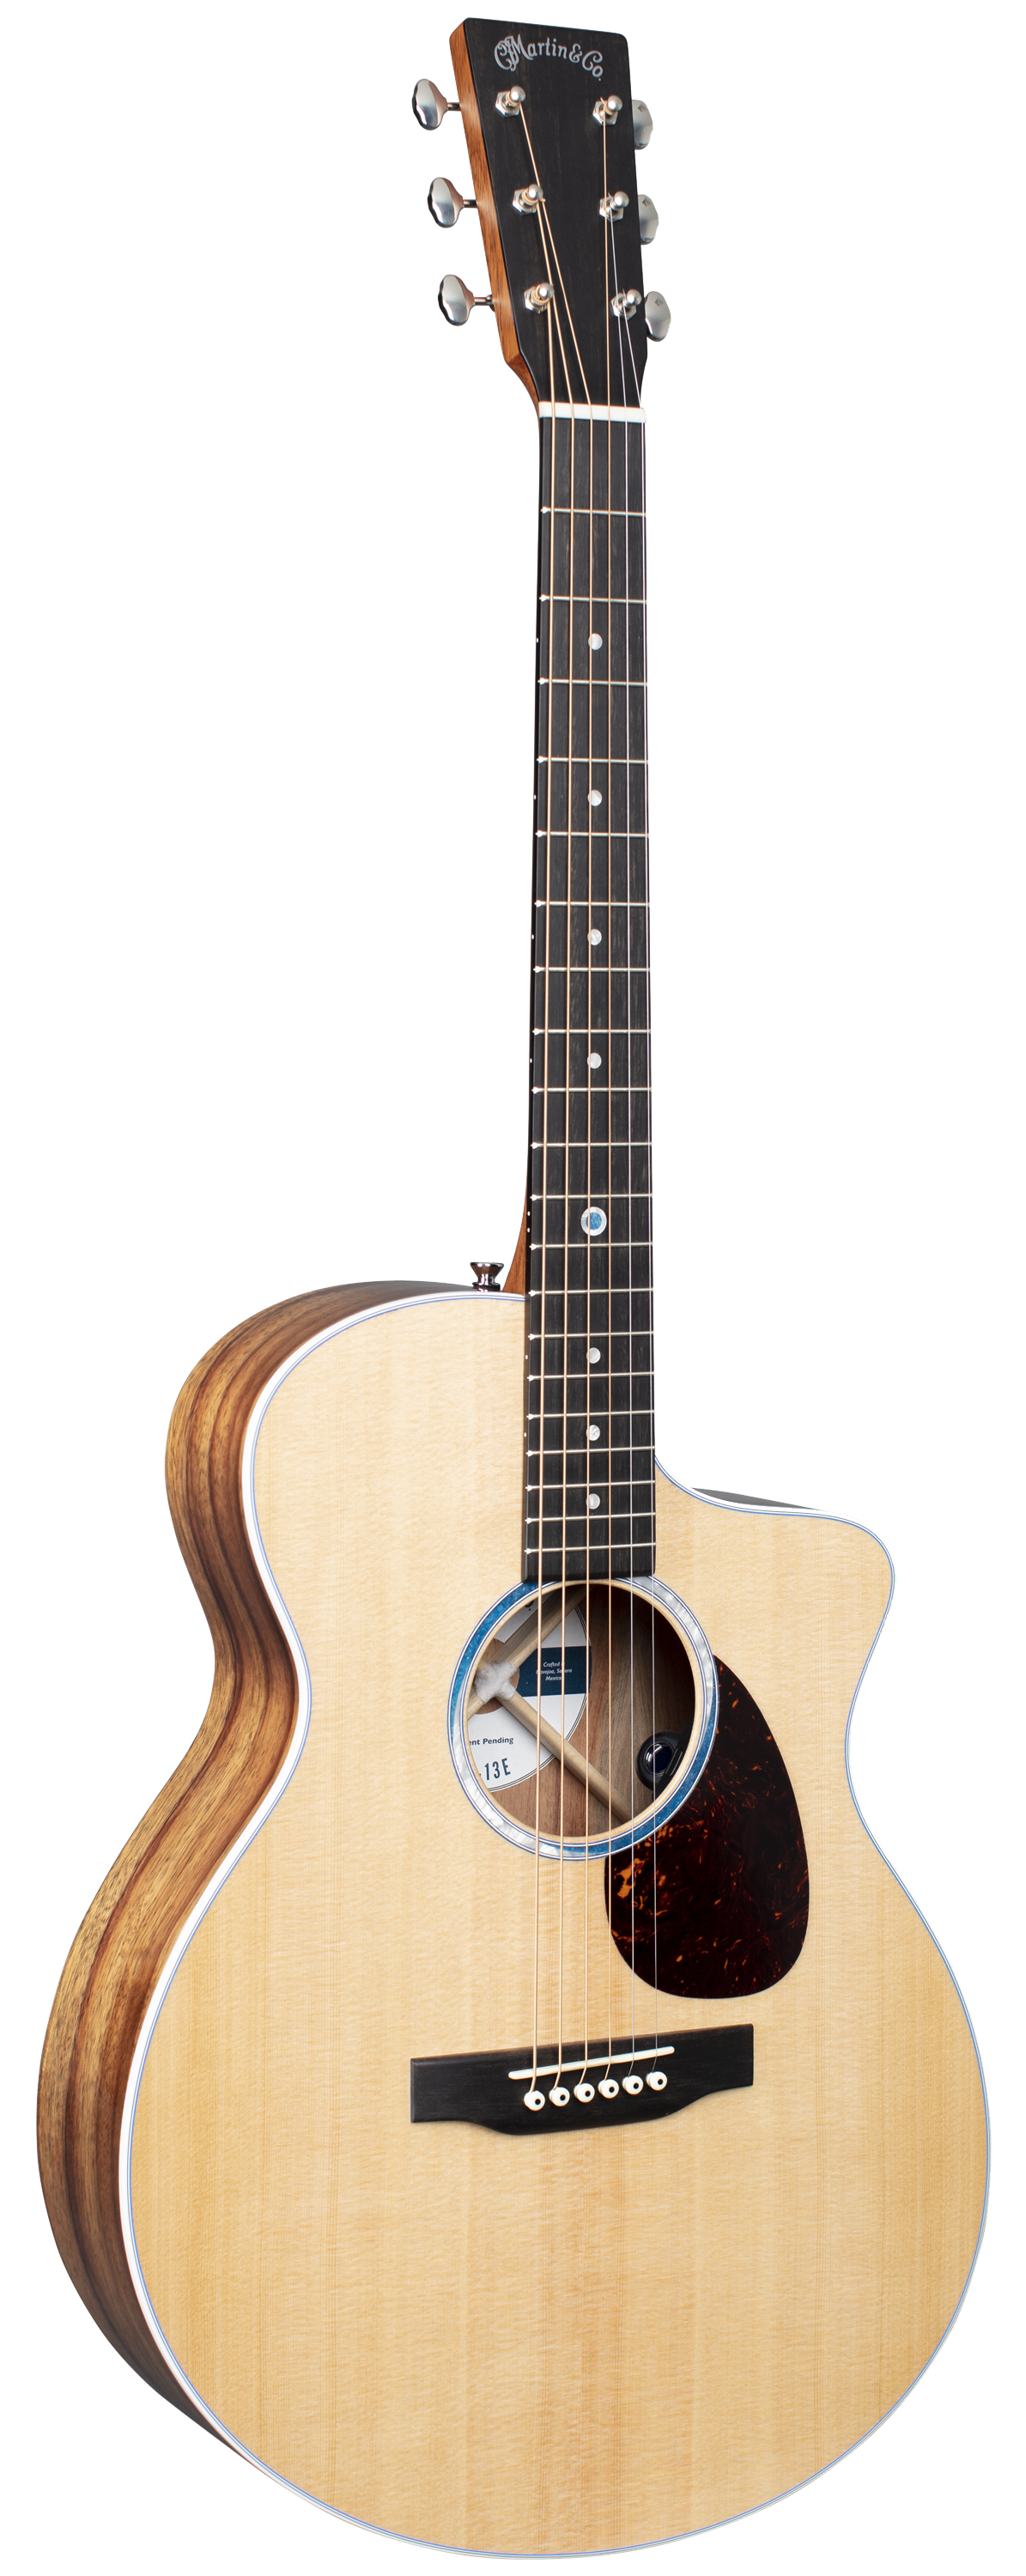 Martin SC-13E Road Series Acoustic guitar Tone Shop Guitars Dallas TX